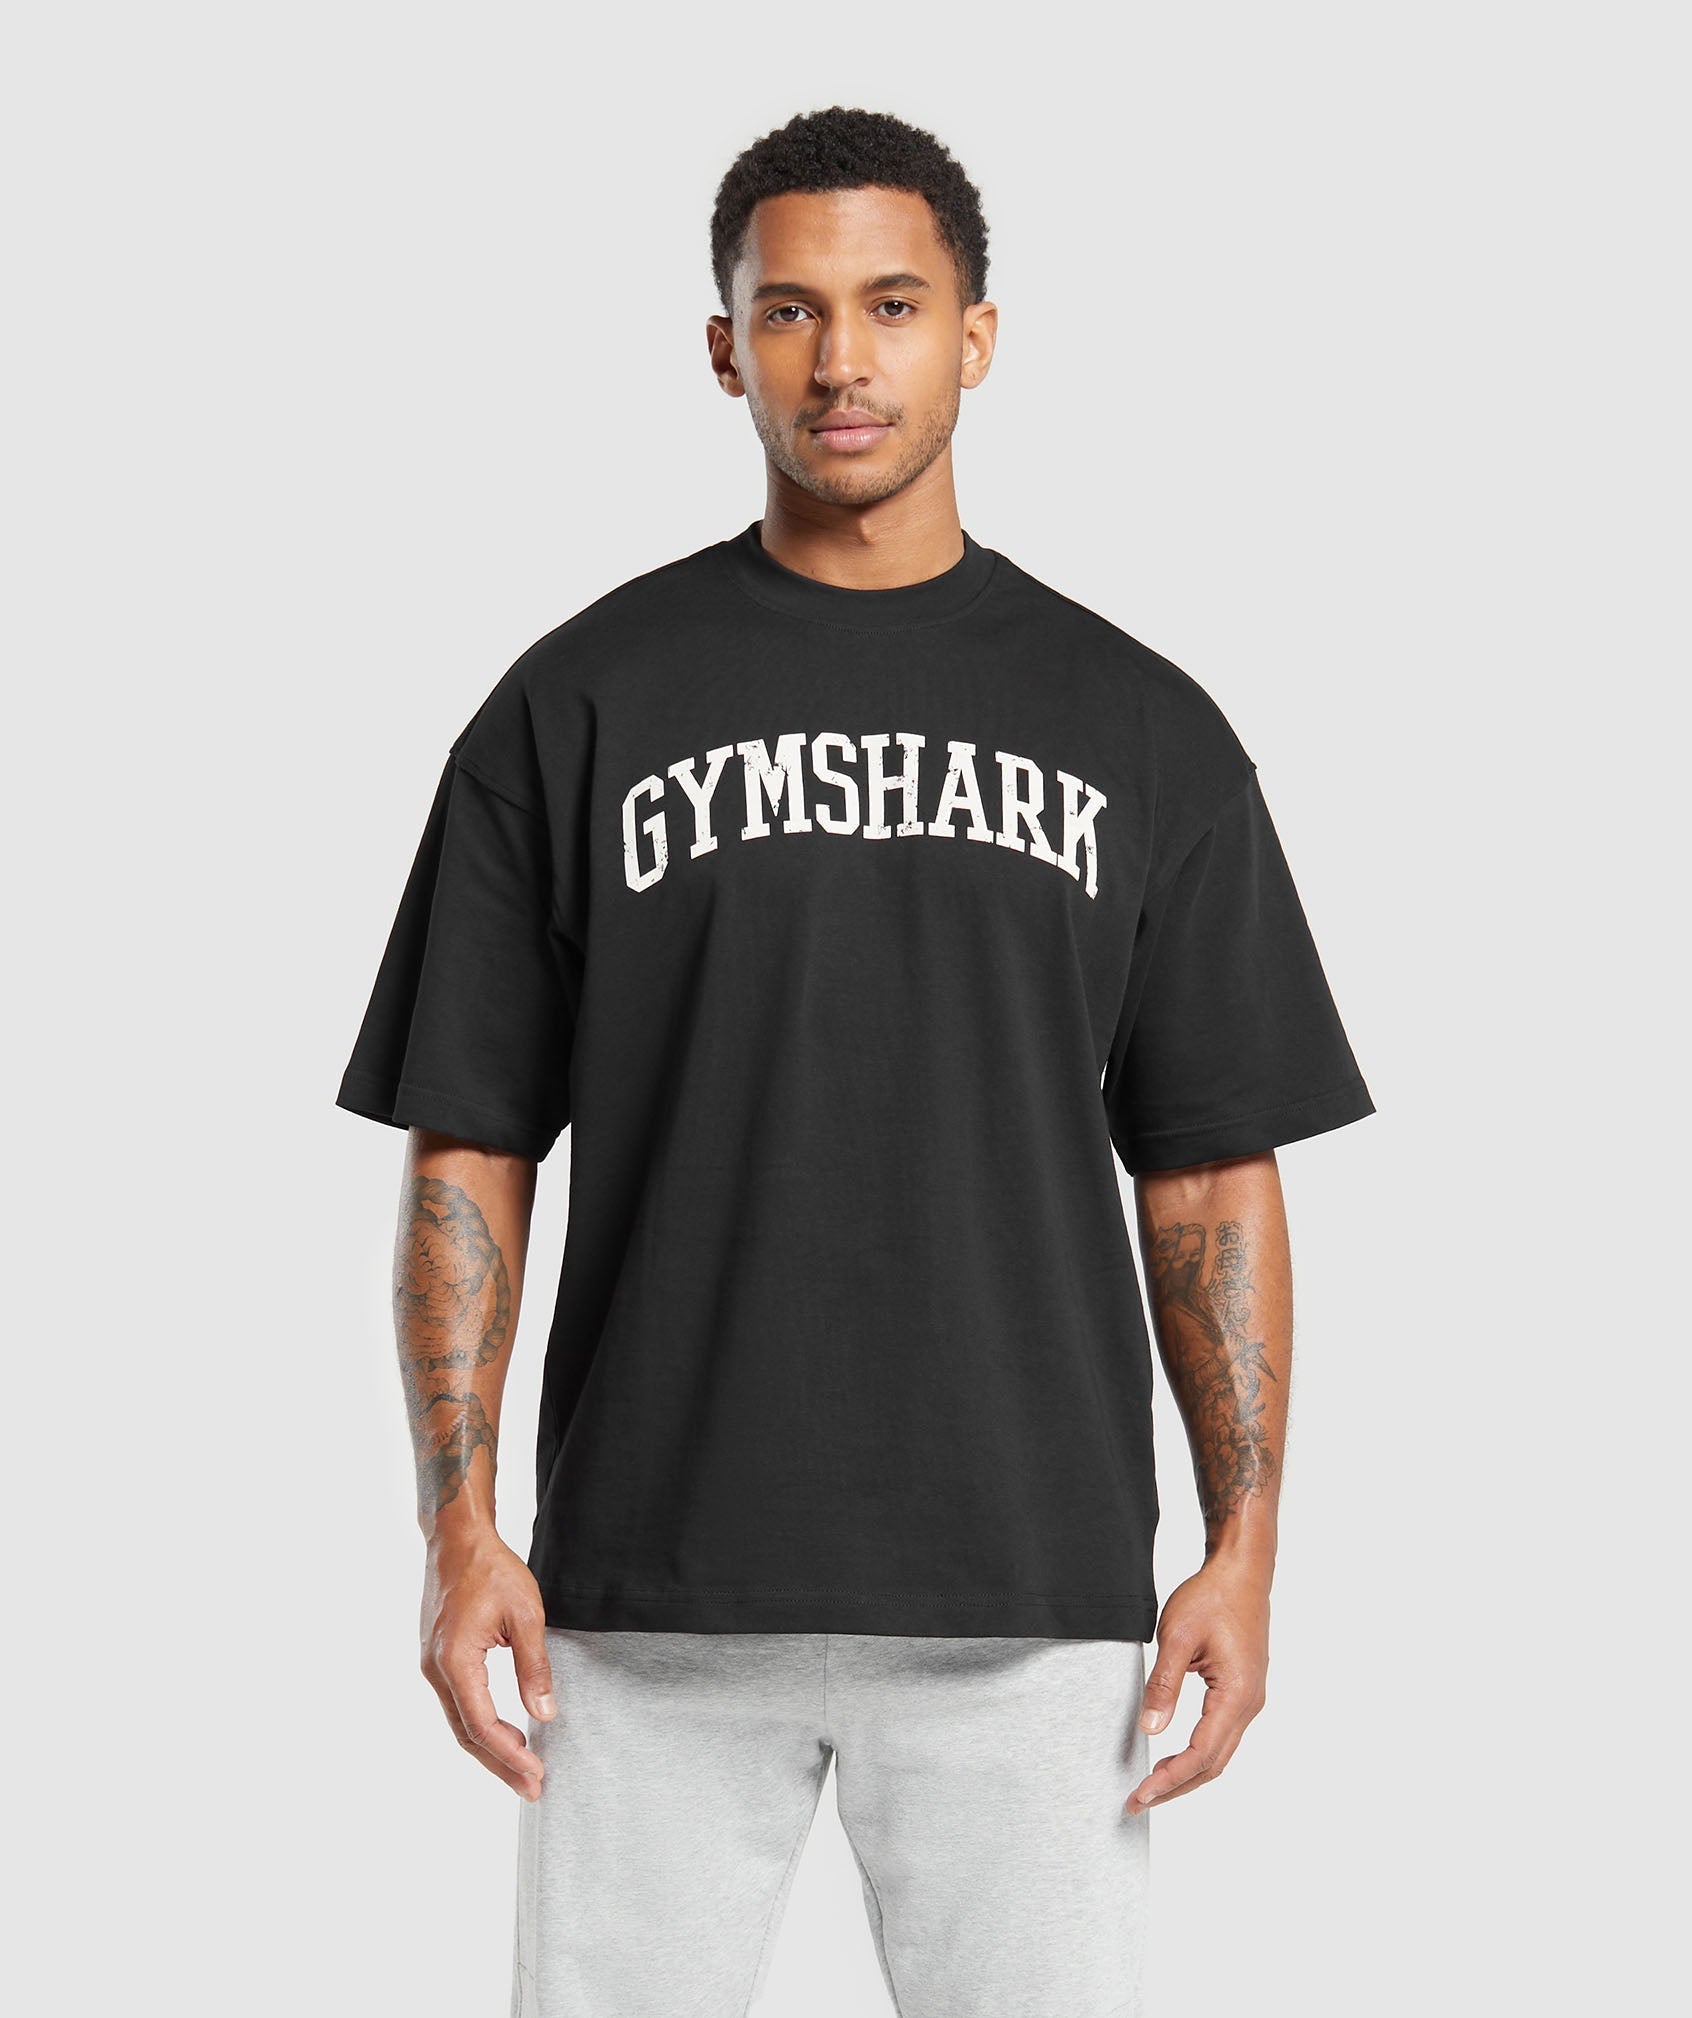 Collegiate T-Shirt in Black - view 1